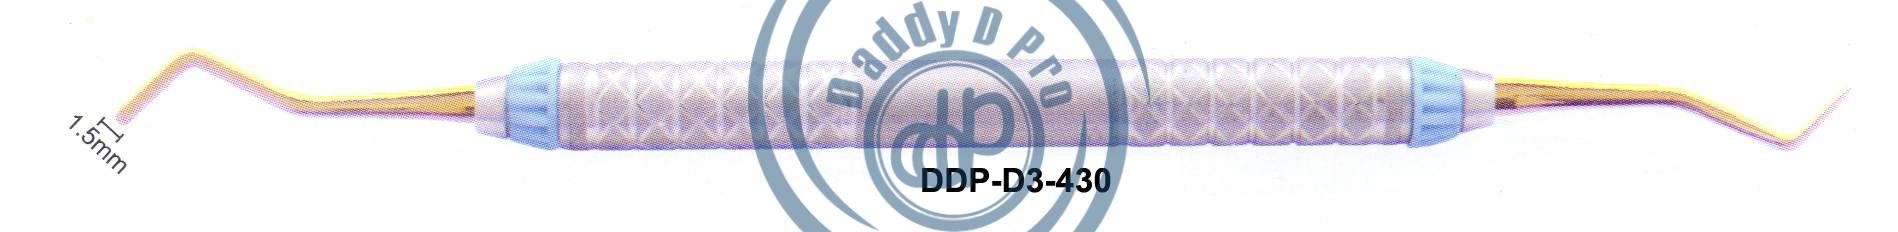 images/DDP-D3-430.png